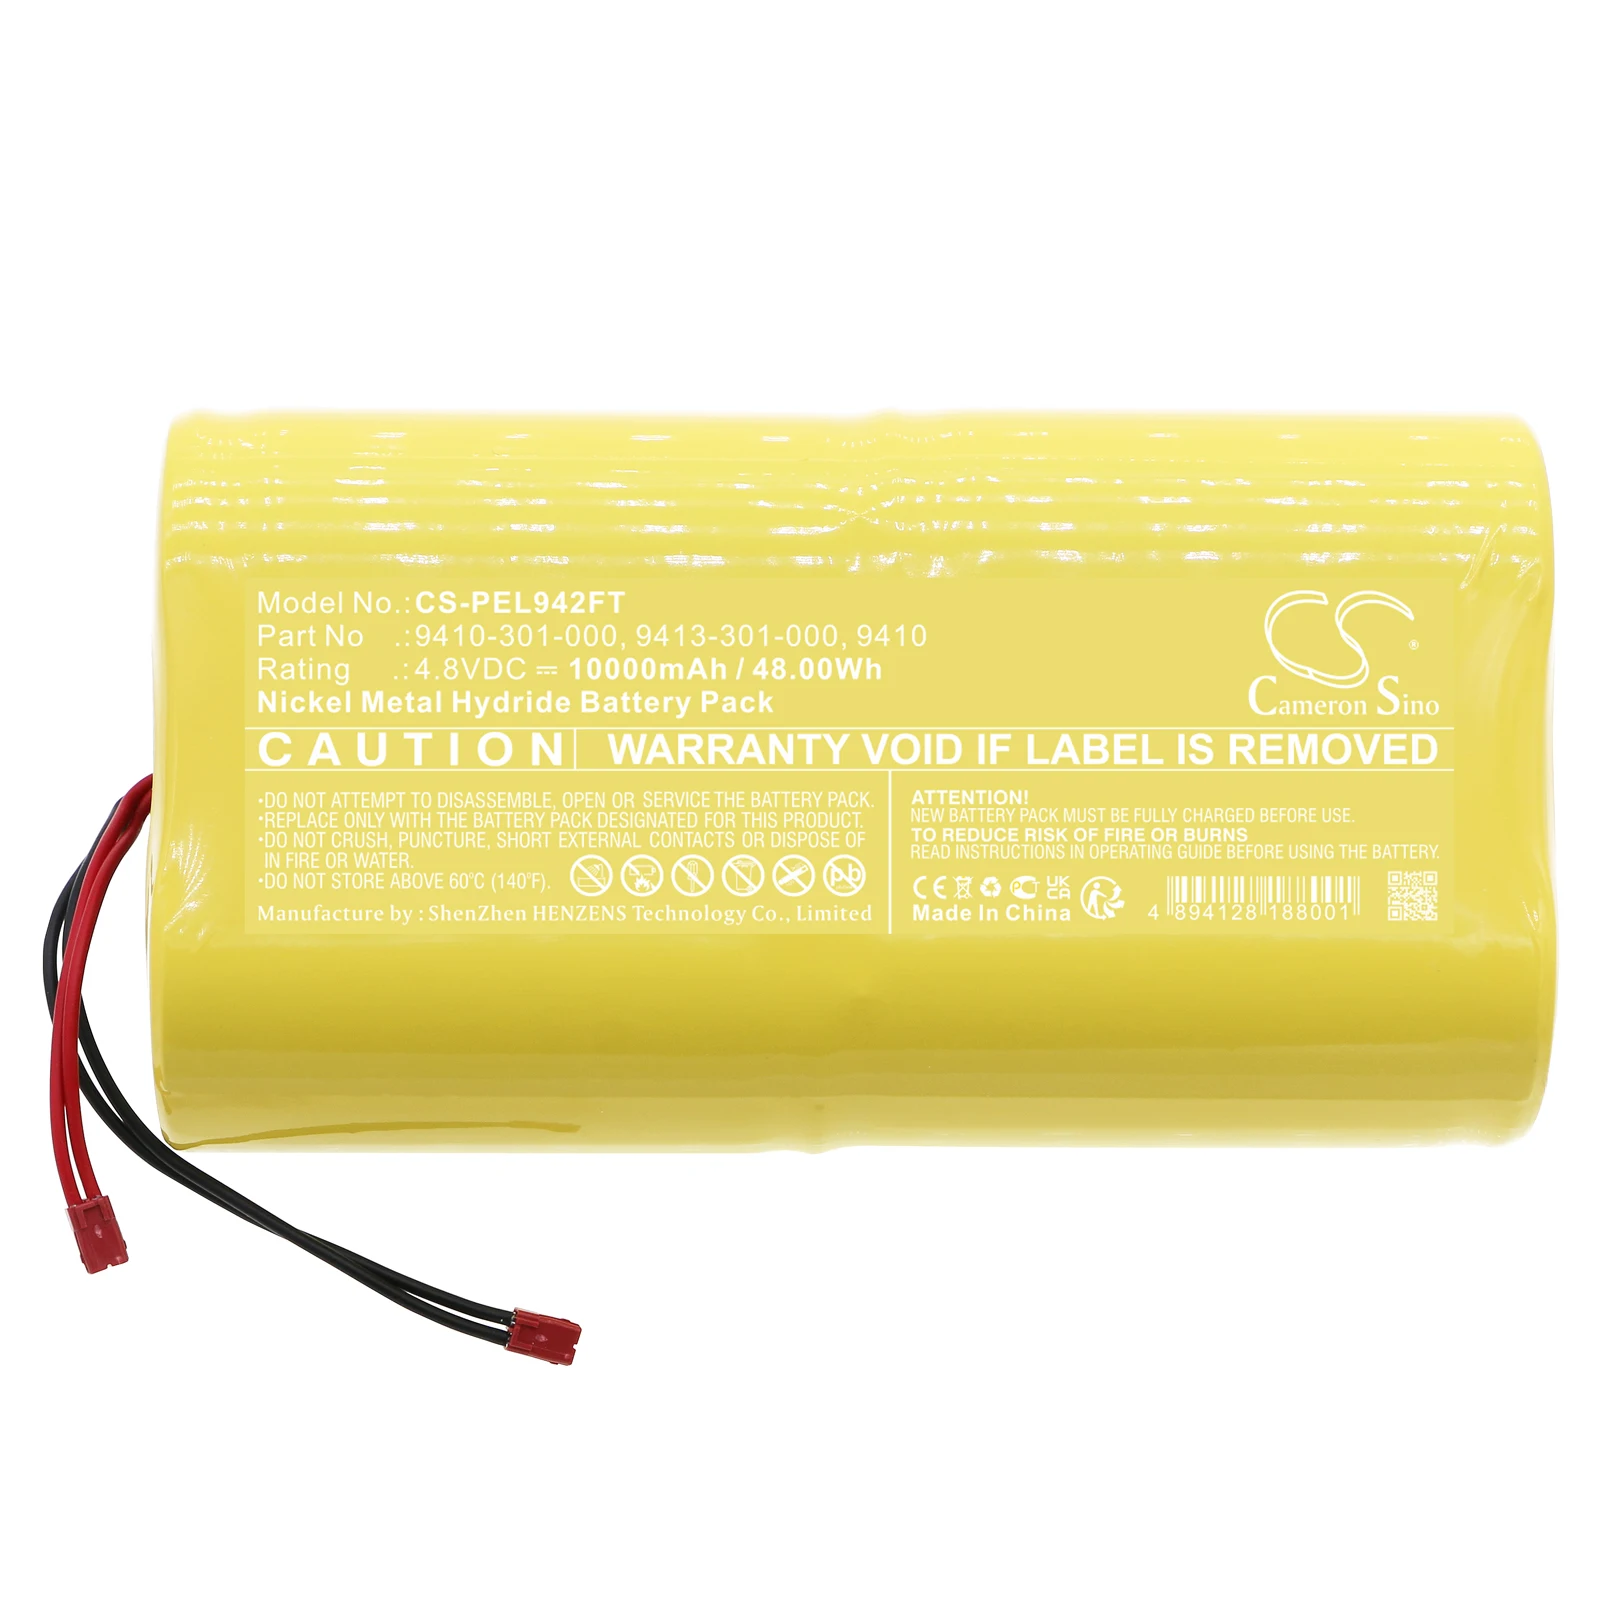 

10000mAh Ni-MH 4.8V 48.00Wh Battery For Pelican 9410 9419 9410-301-000 9413-301-000 9410 Flashlight